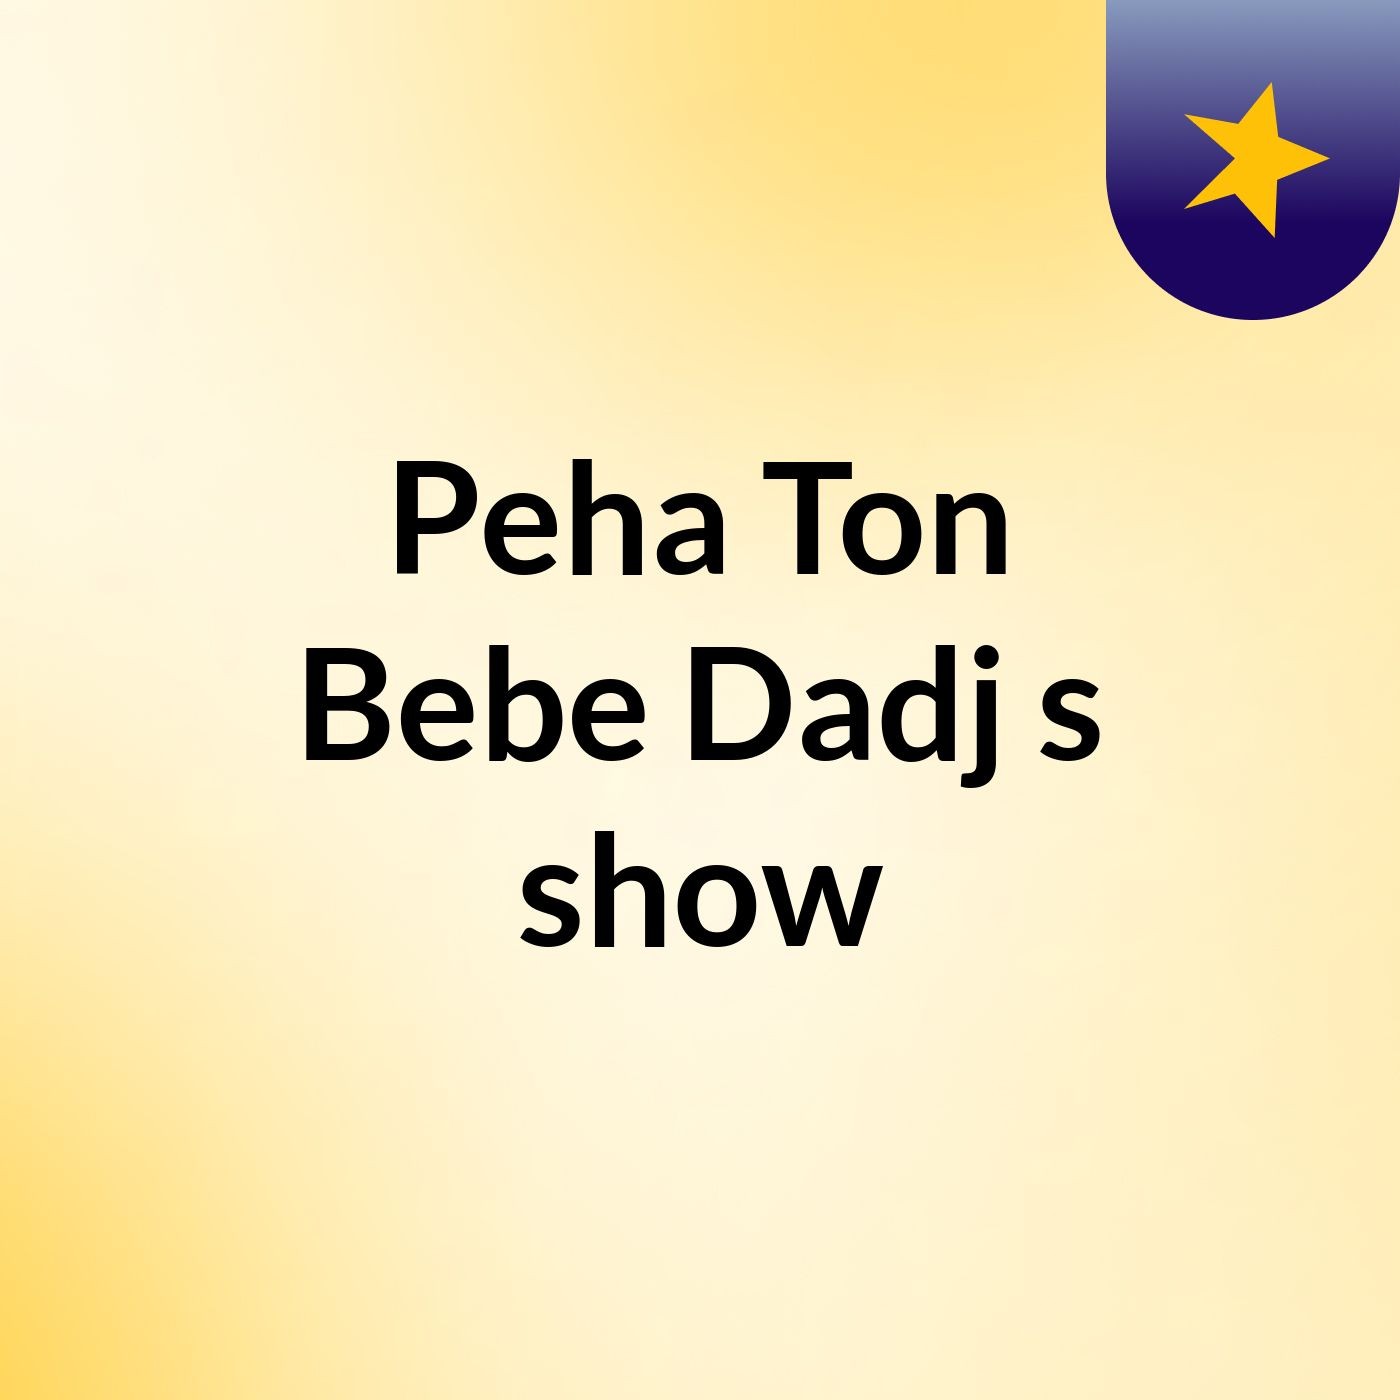 Peha Ton Bebe Dadj's show